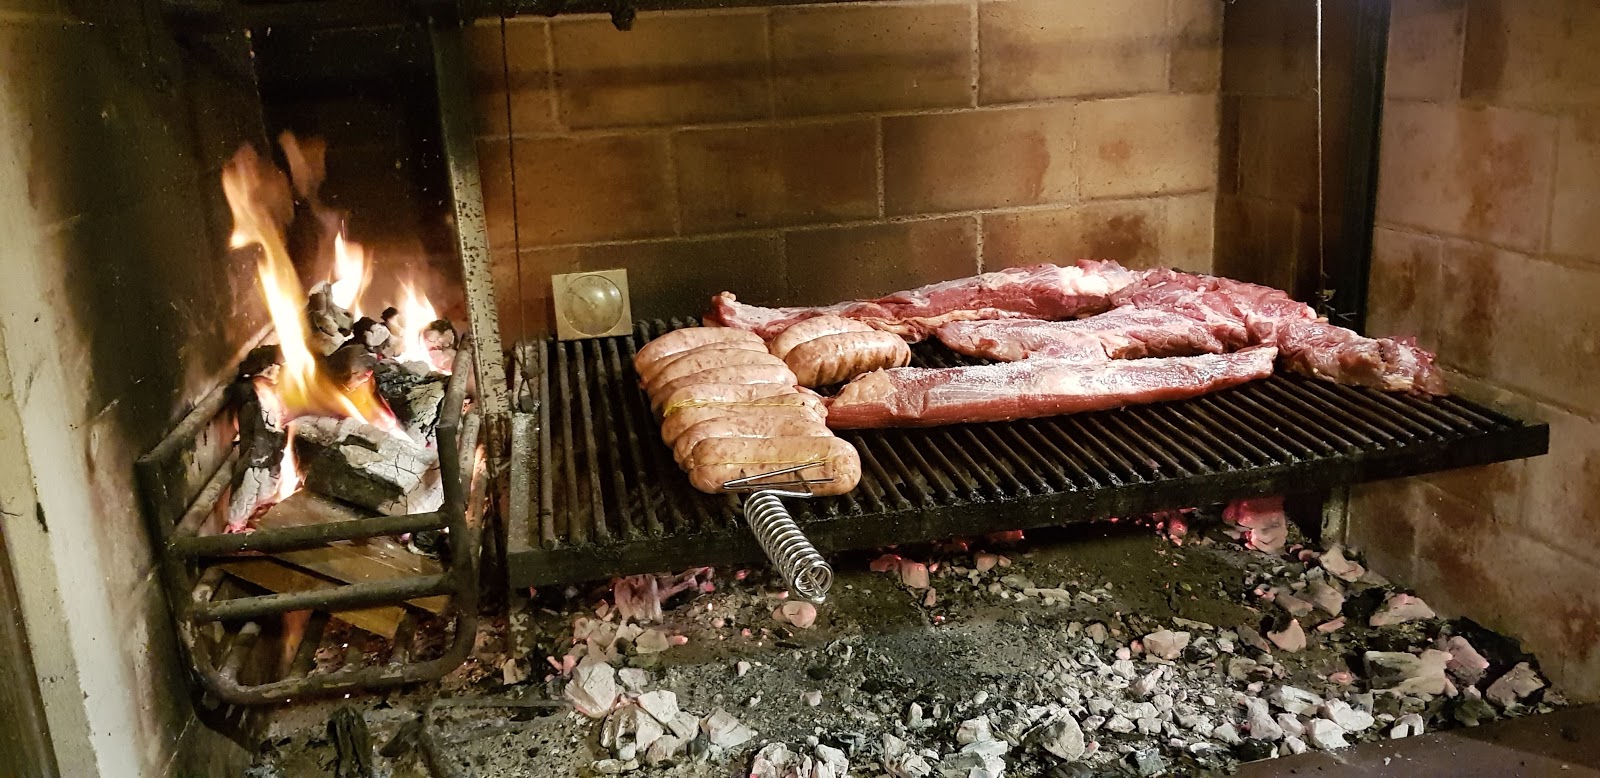 Parrilla fire and asado